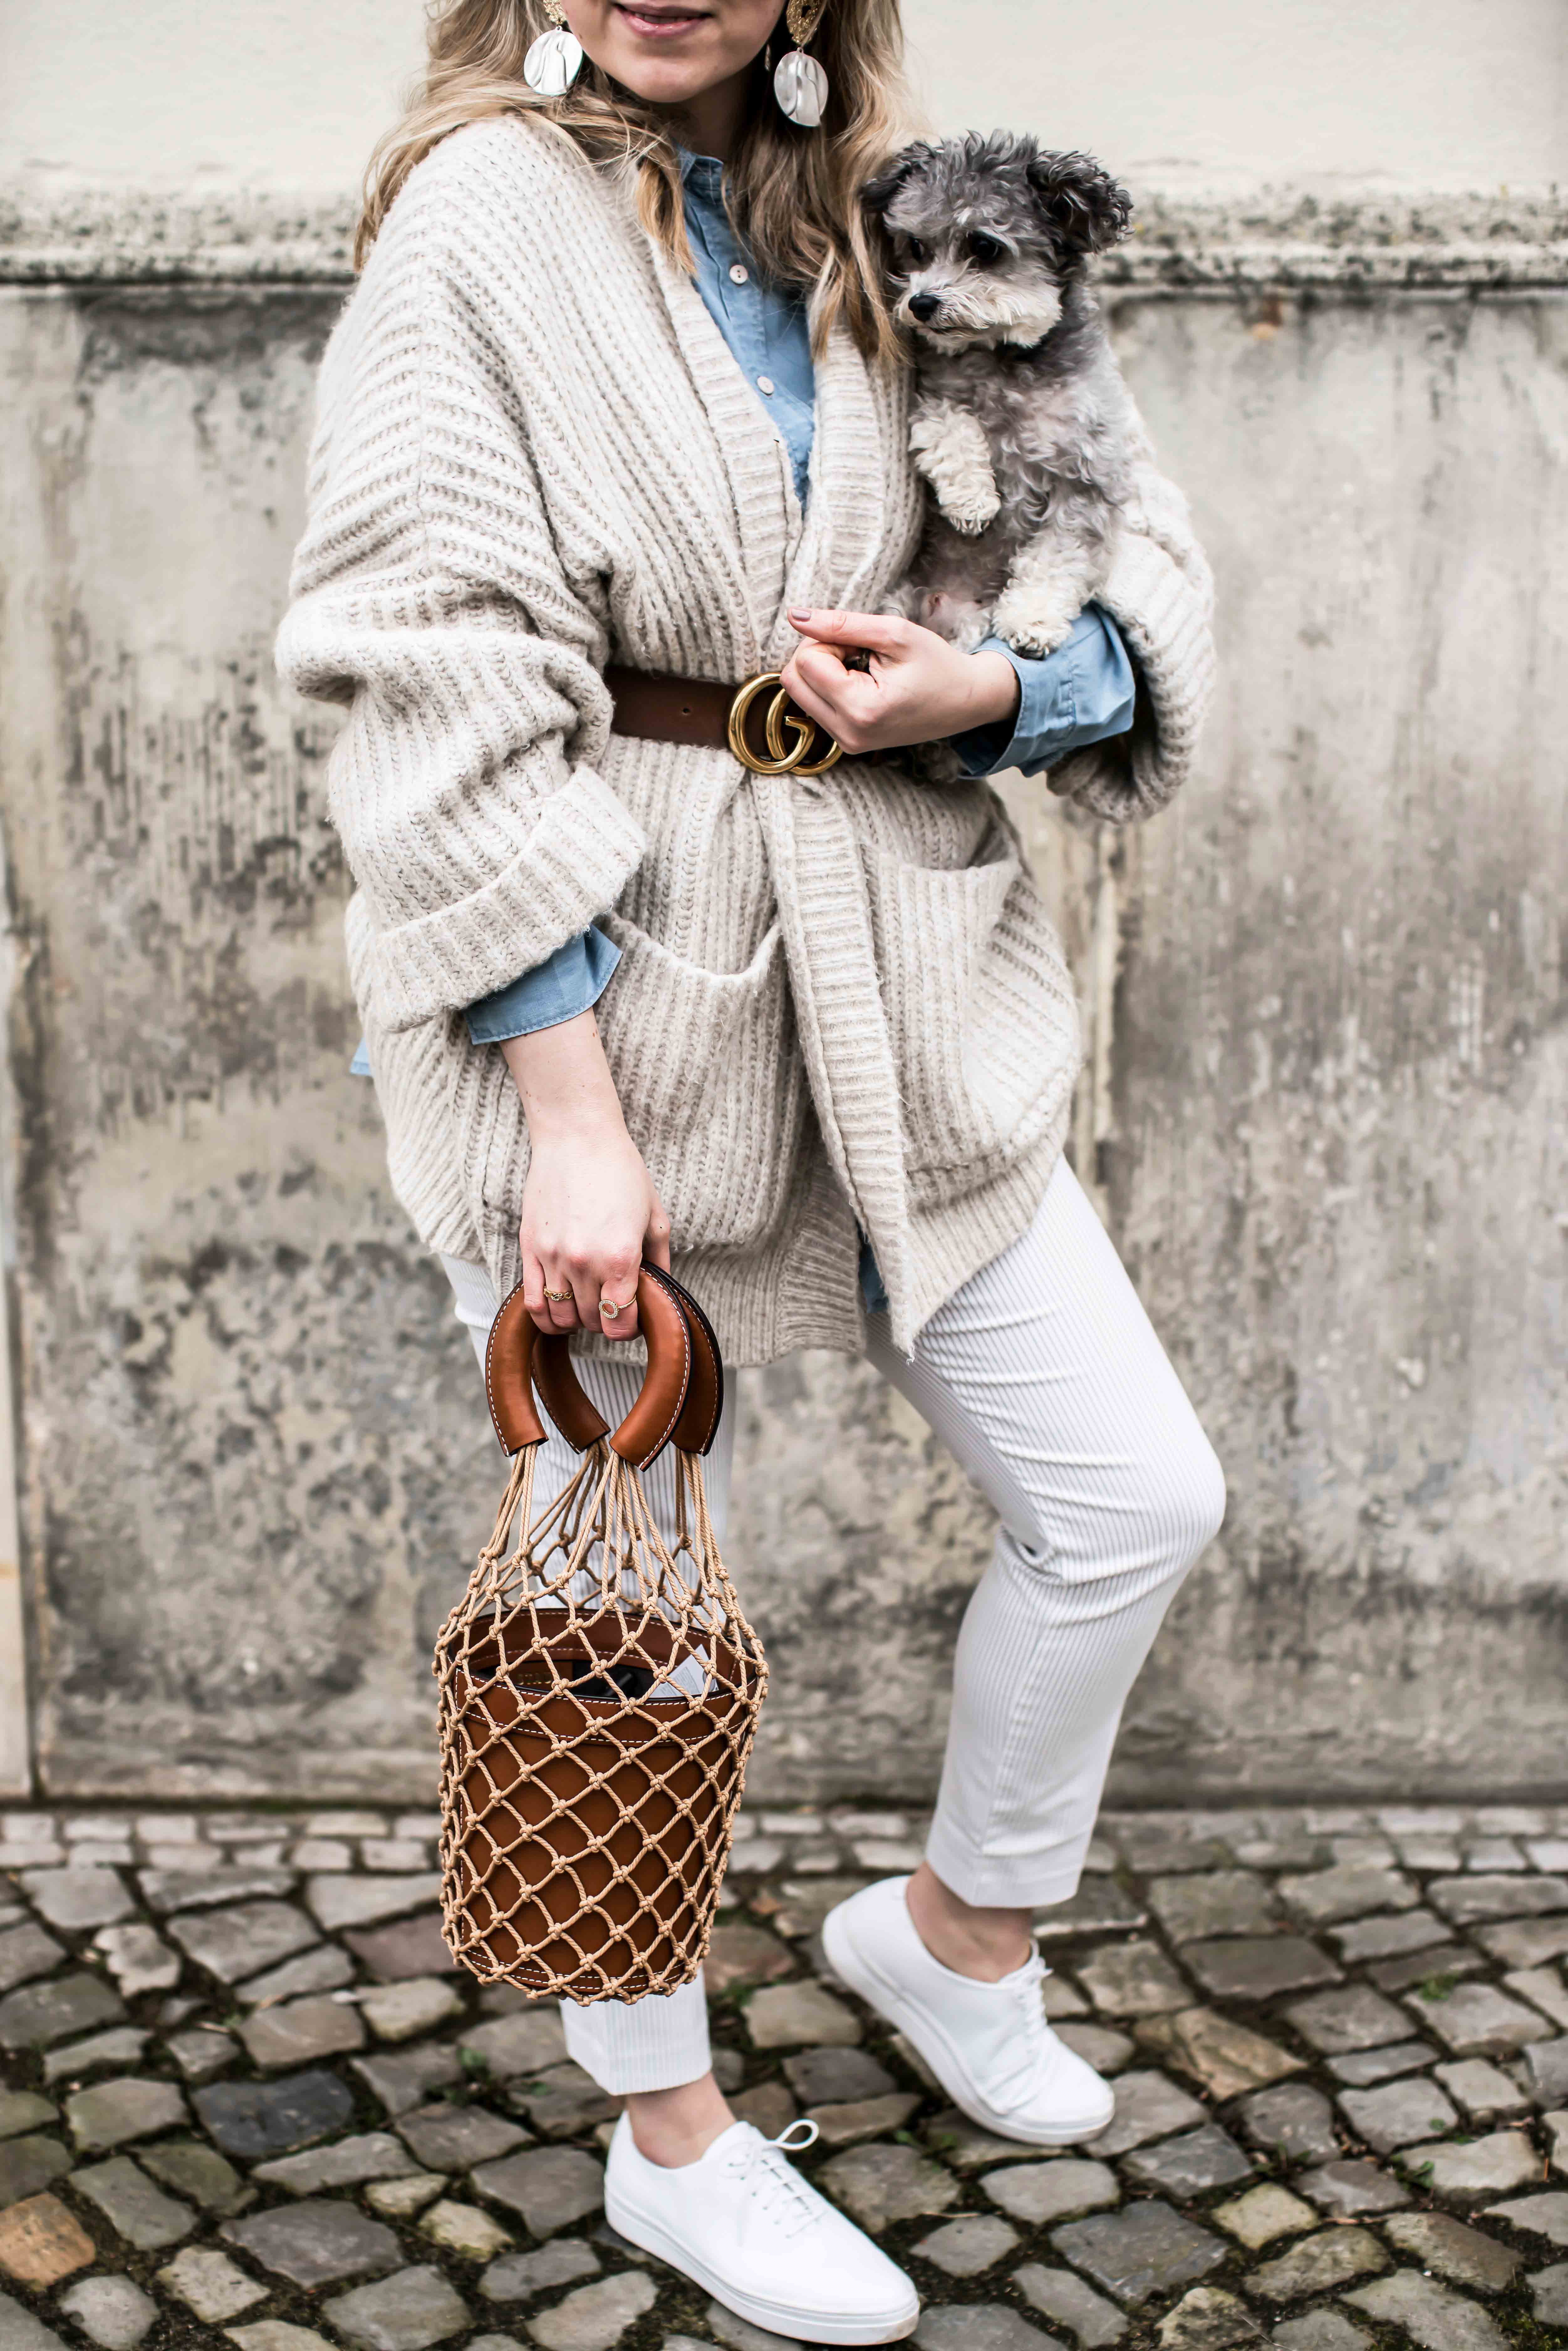 Family First Hundemom ootd: Gucci meets zara knitwear